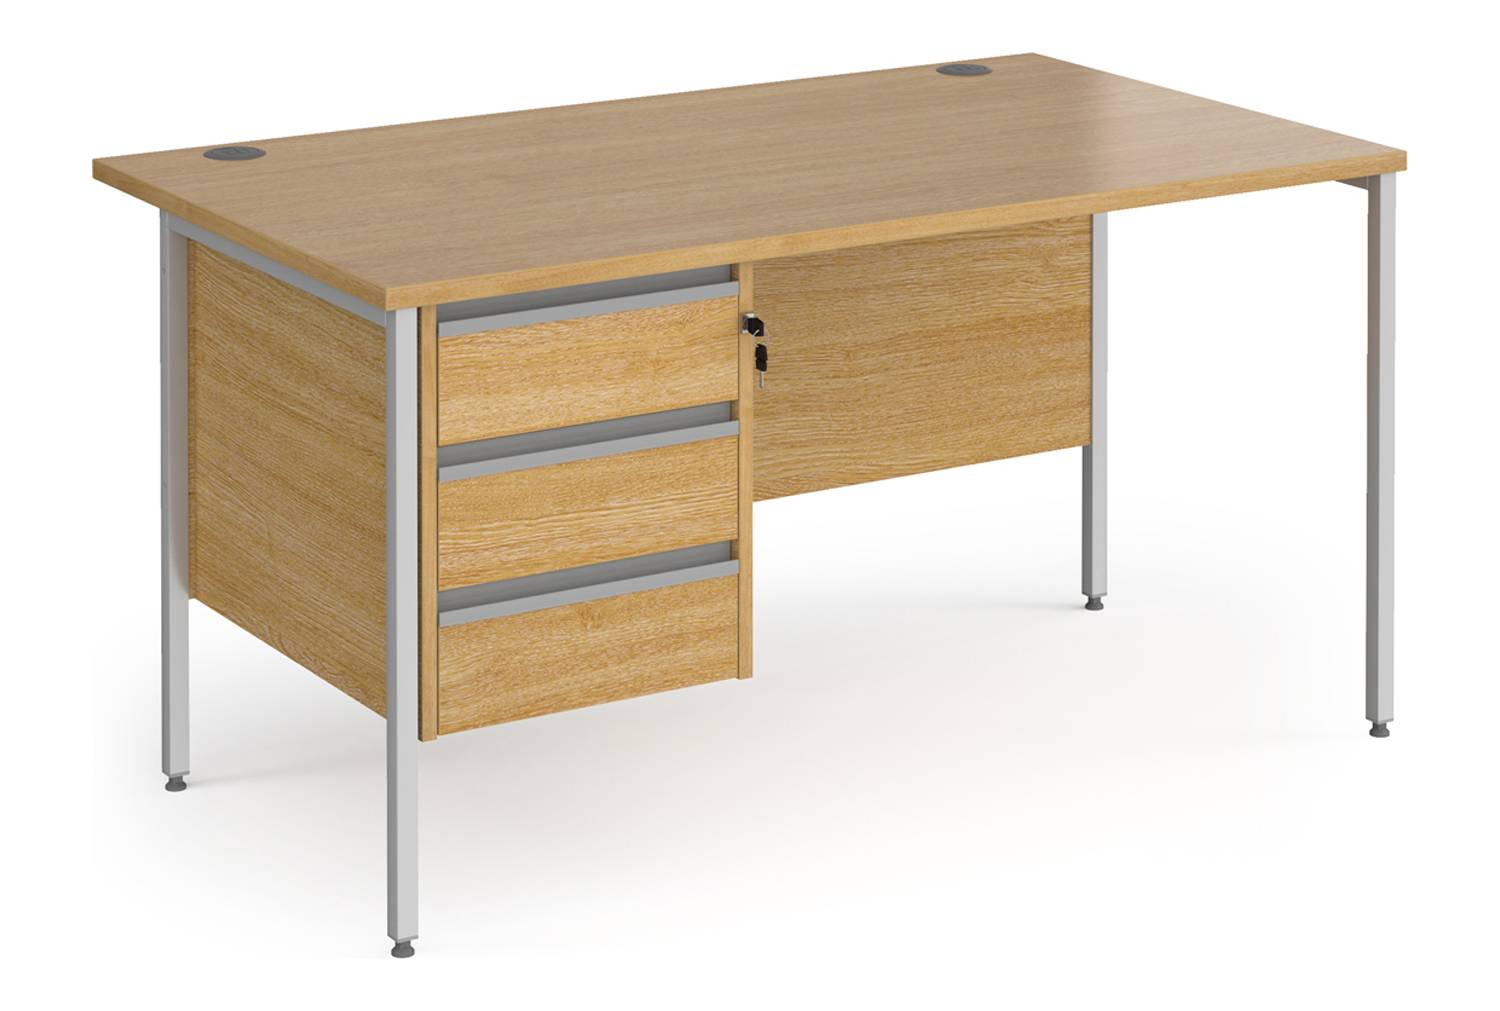 Value Line Classic+ Rectangular H-Leg Office Desk 3 Drawers (Silver Leg), 140wx80dx73h (cm), Oak, Express Delivery